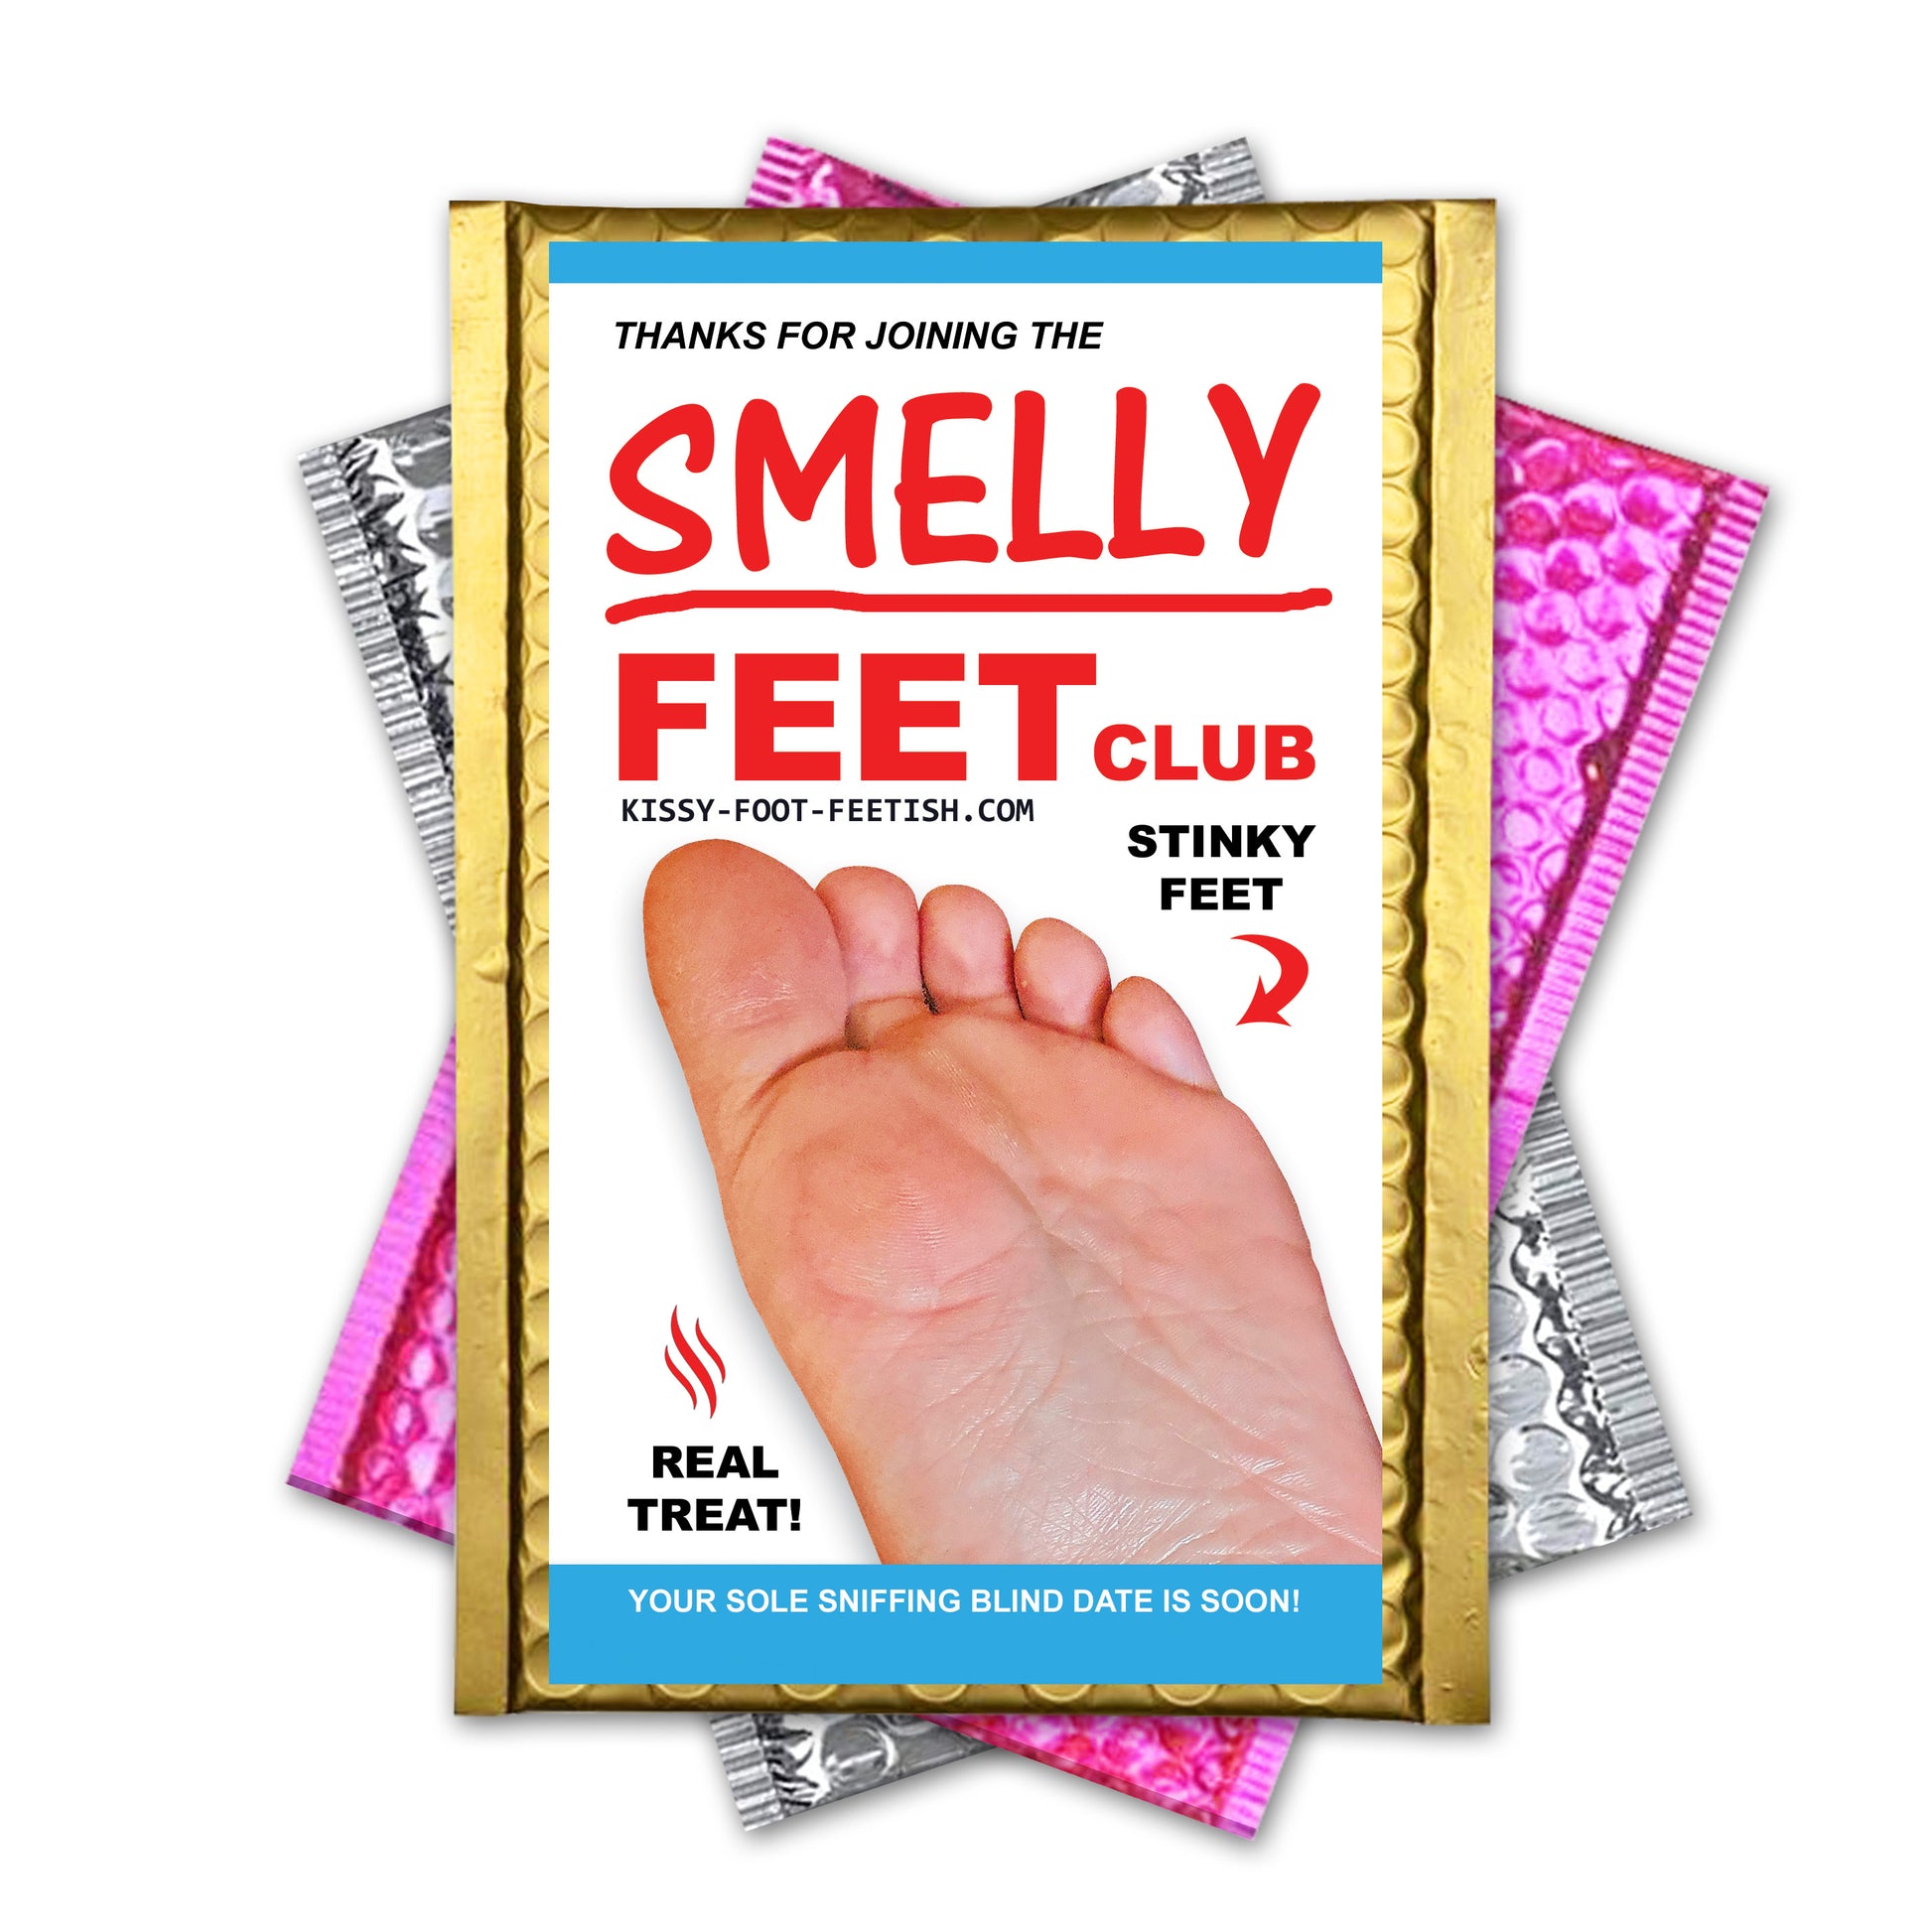 Smelly Feet Club Embarrassing Mail Prank